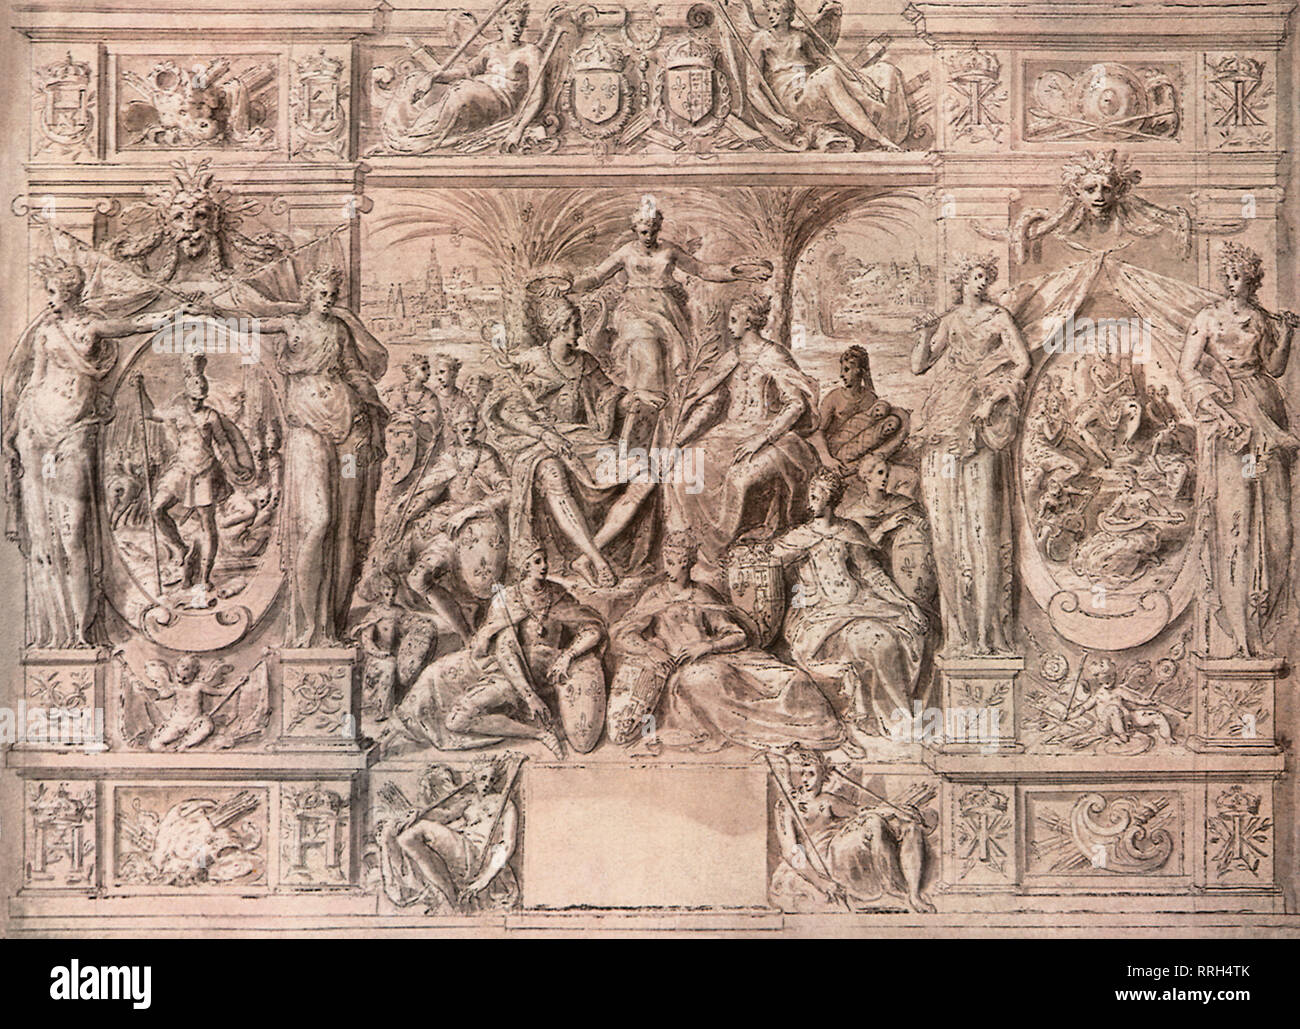 Henri II and Catherine de Medicis' Lineage 1580. Stock Photo